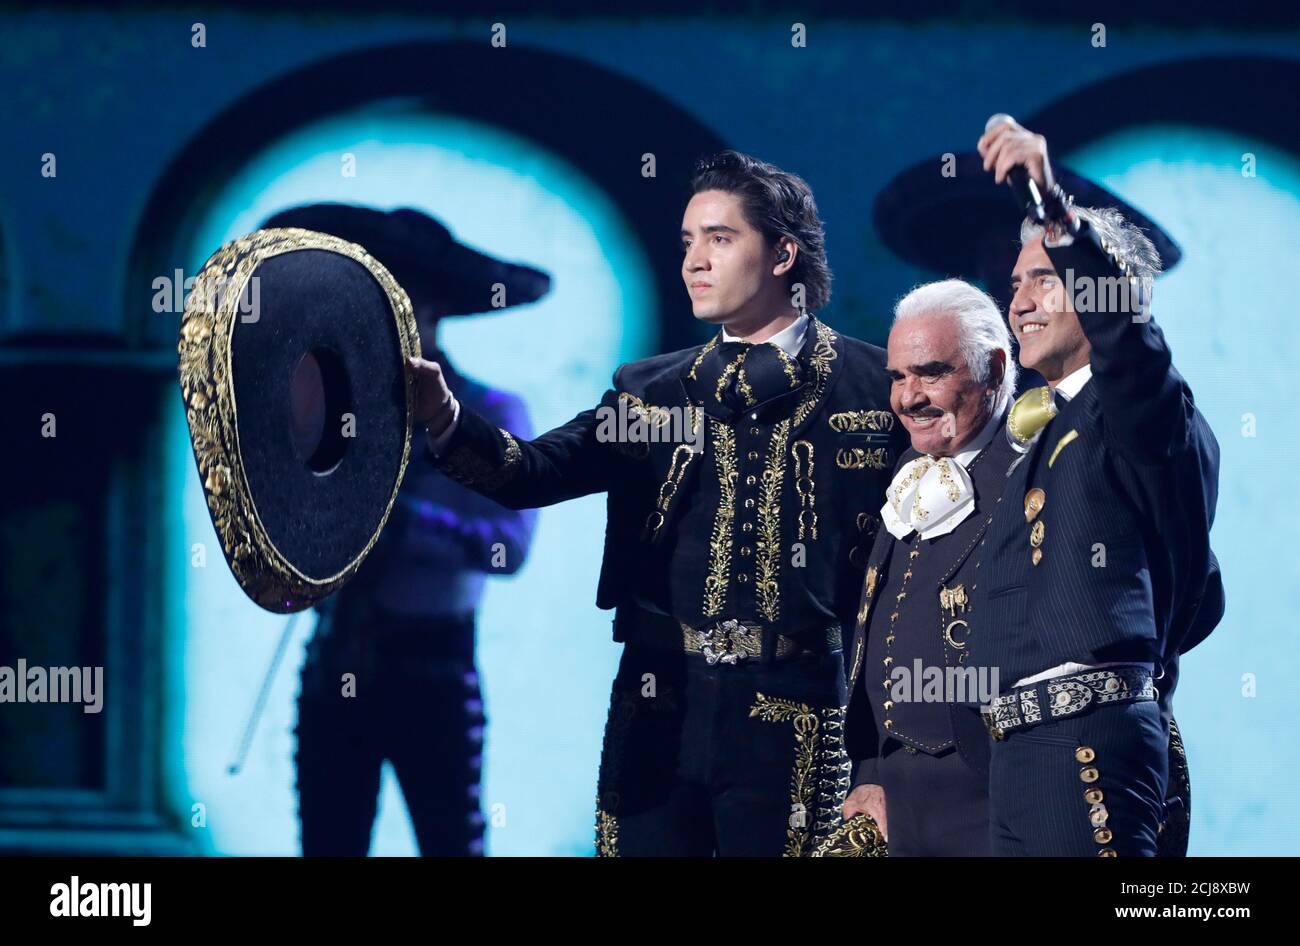 The 20th Annual Latin Grammy Awards - Show - Las Vegas, Nevada, U.S., November 14, 2019 - Alex, Vicente, and Alejandro Fernandez perform. REUTERS/Steve Marcus Stock Photo